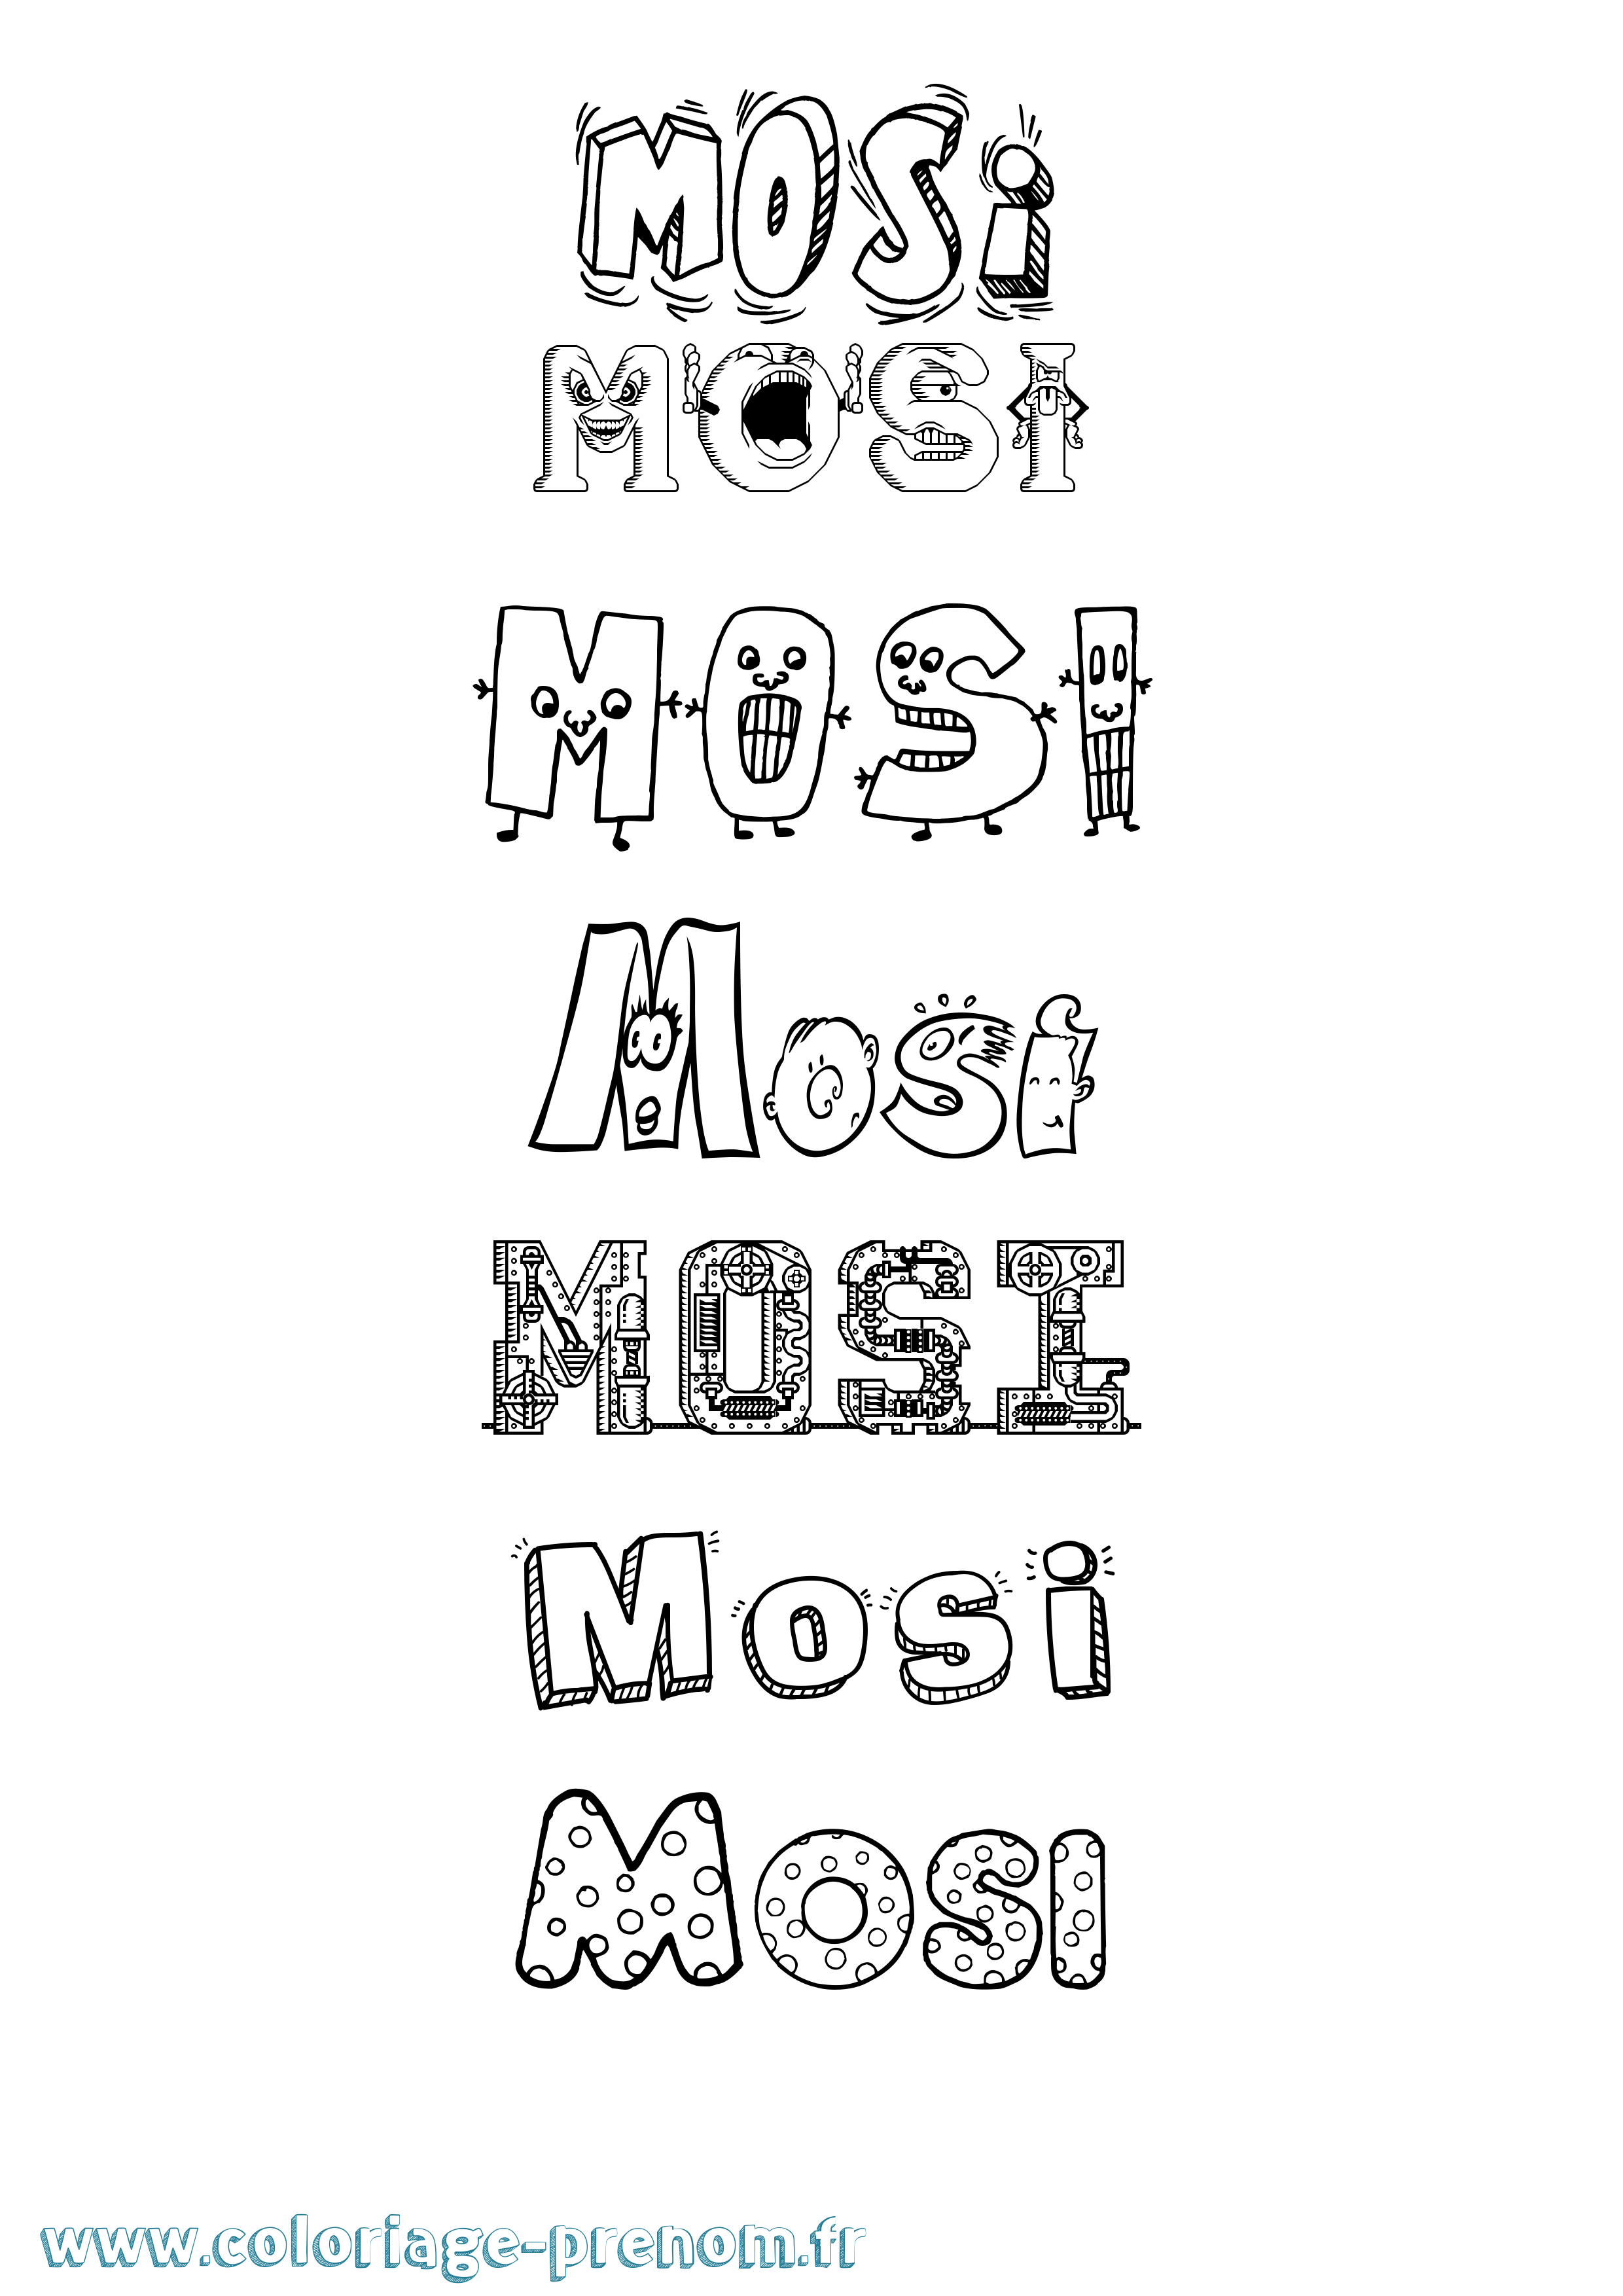 Coloriage prénom Mosi Fun